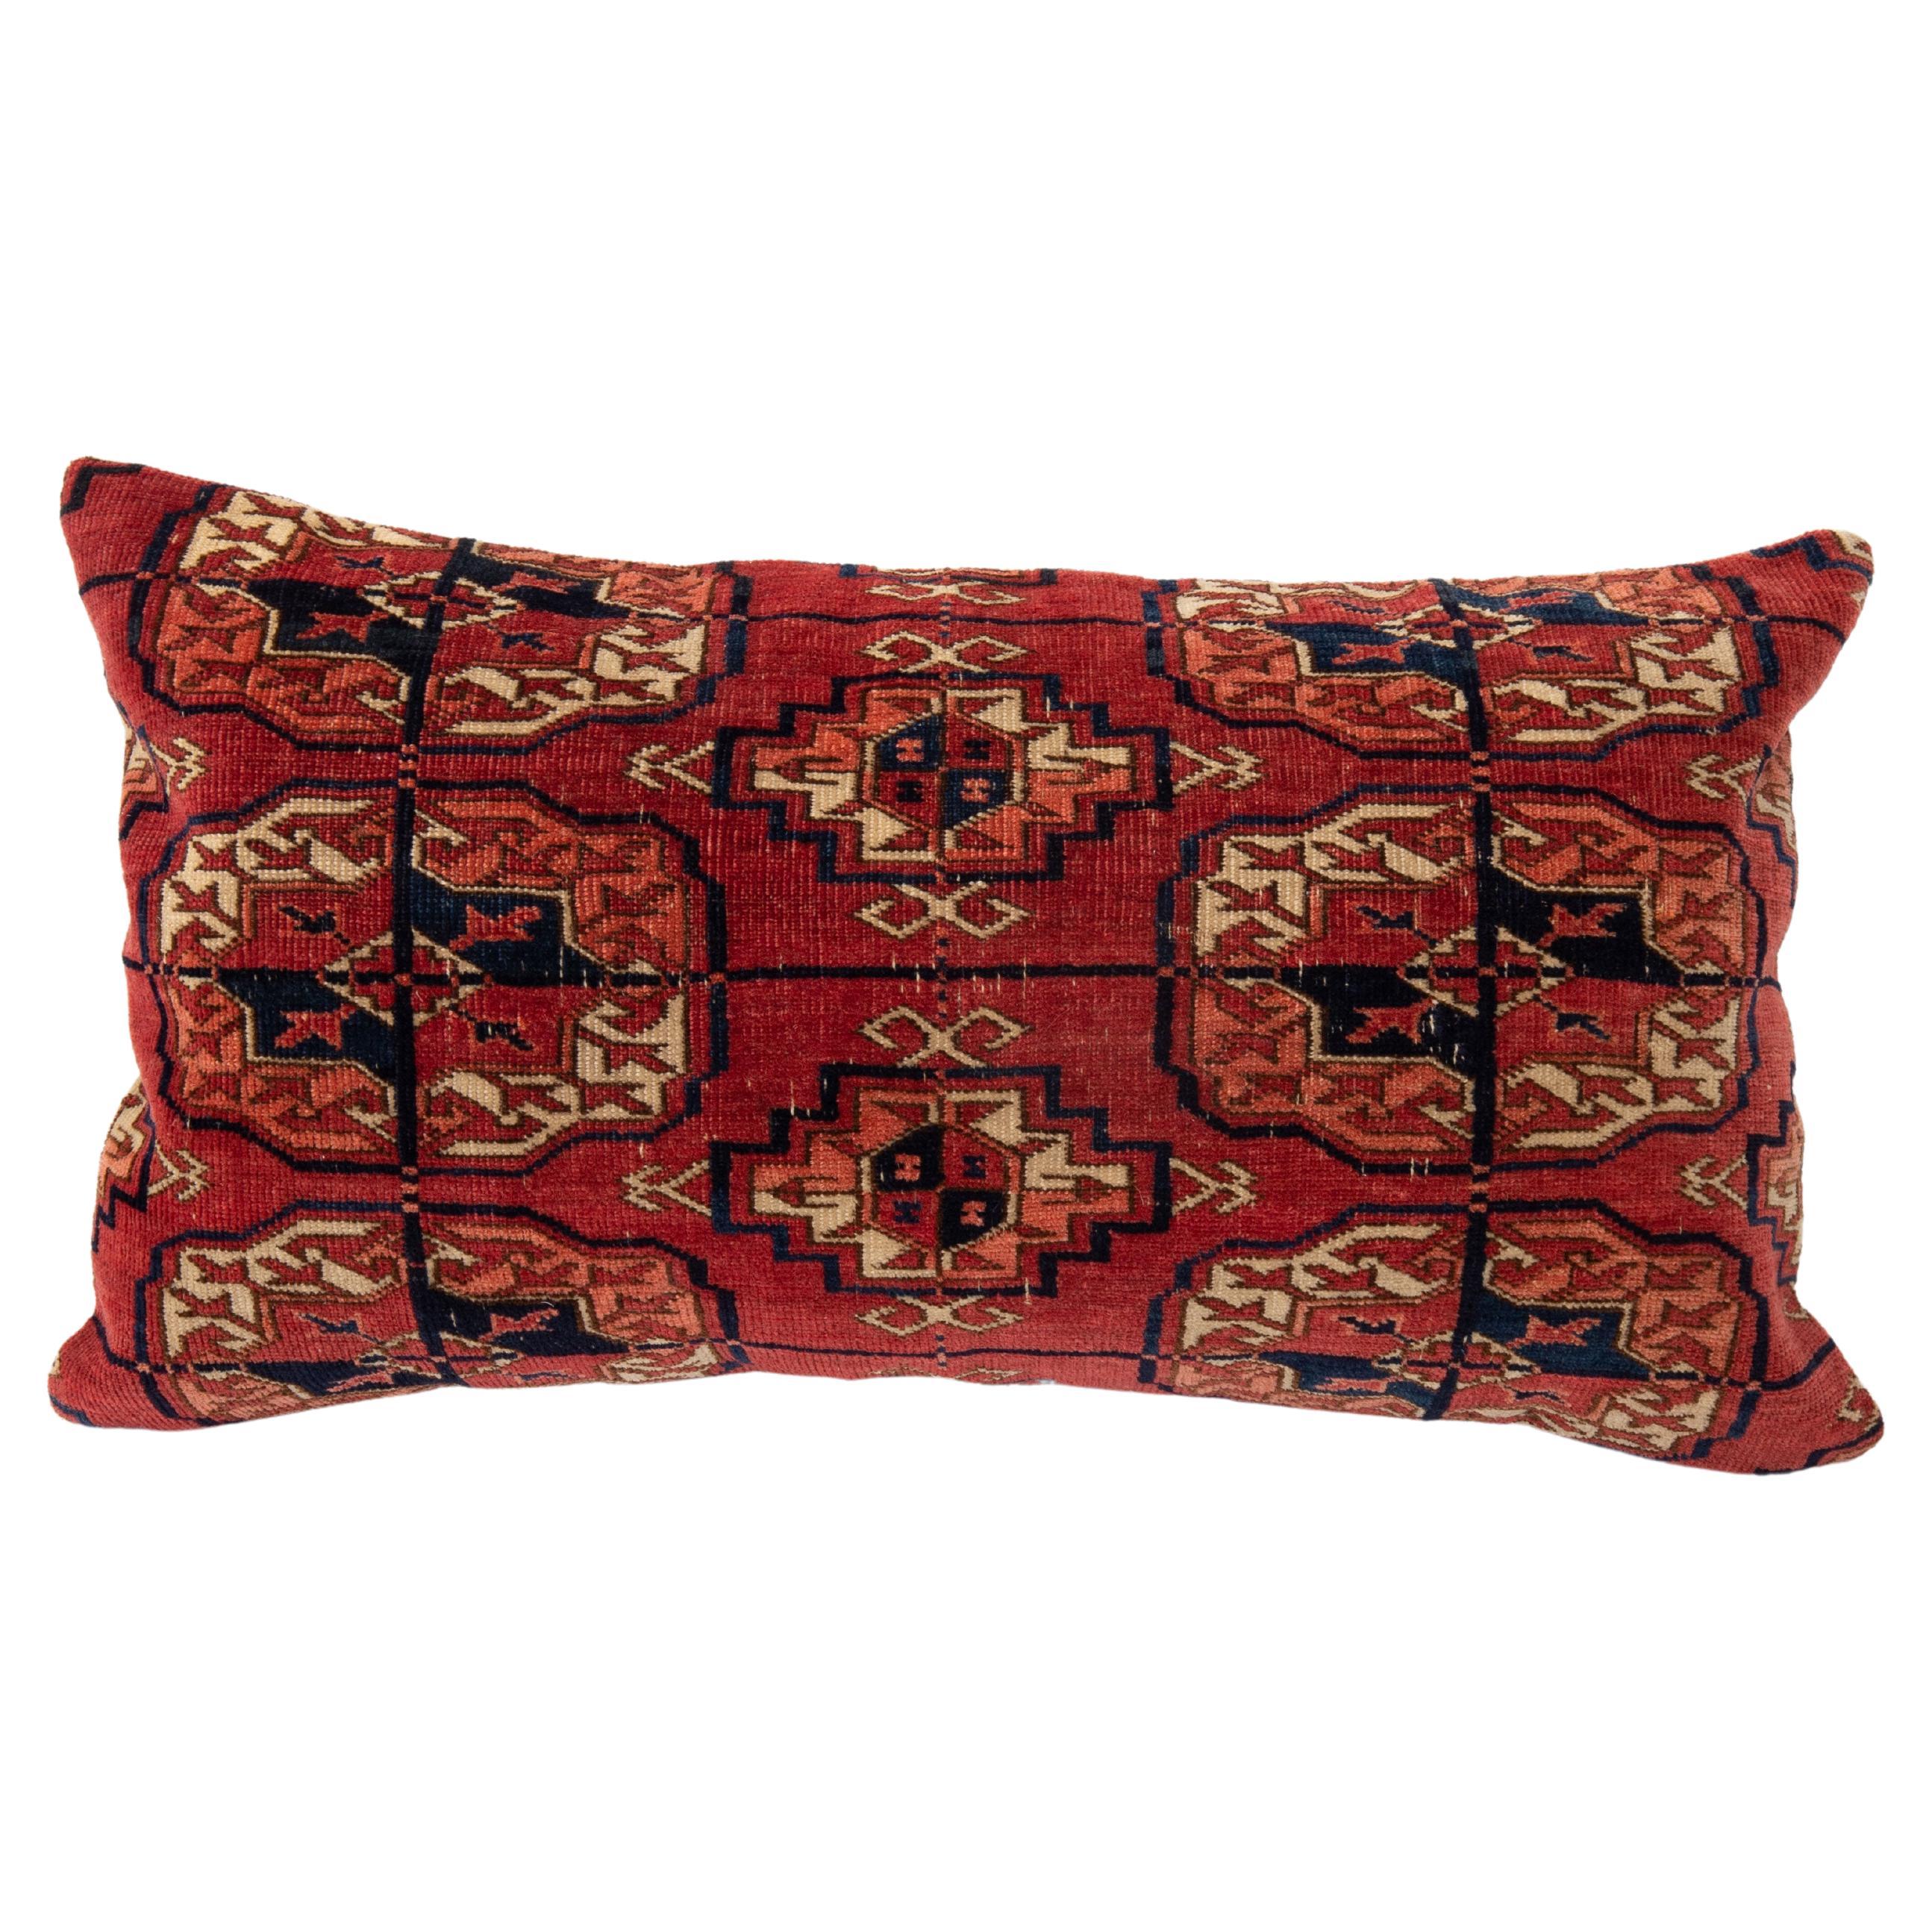 Pillow Cover Made from an Antique Central Asian Turkmen Tekke Rug Fragment